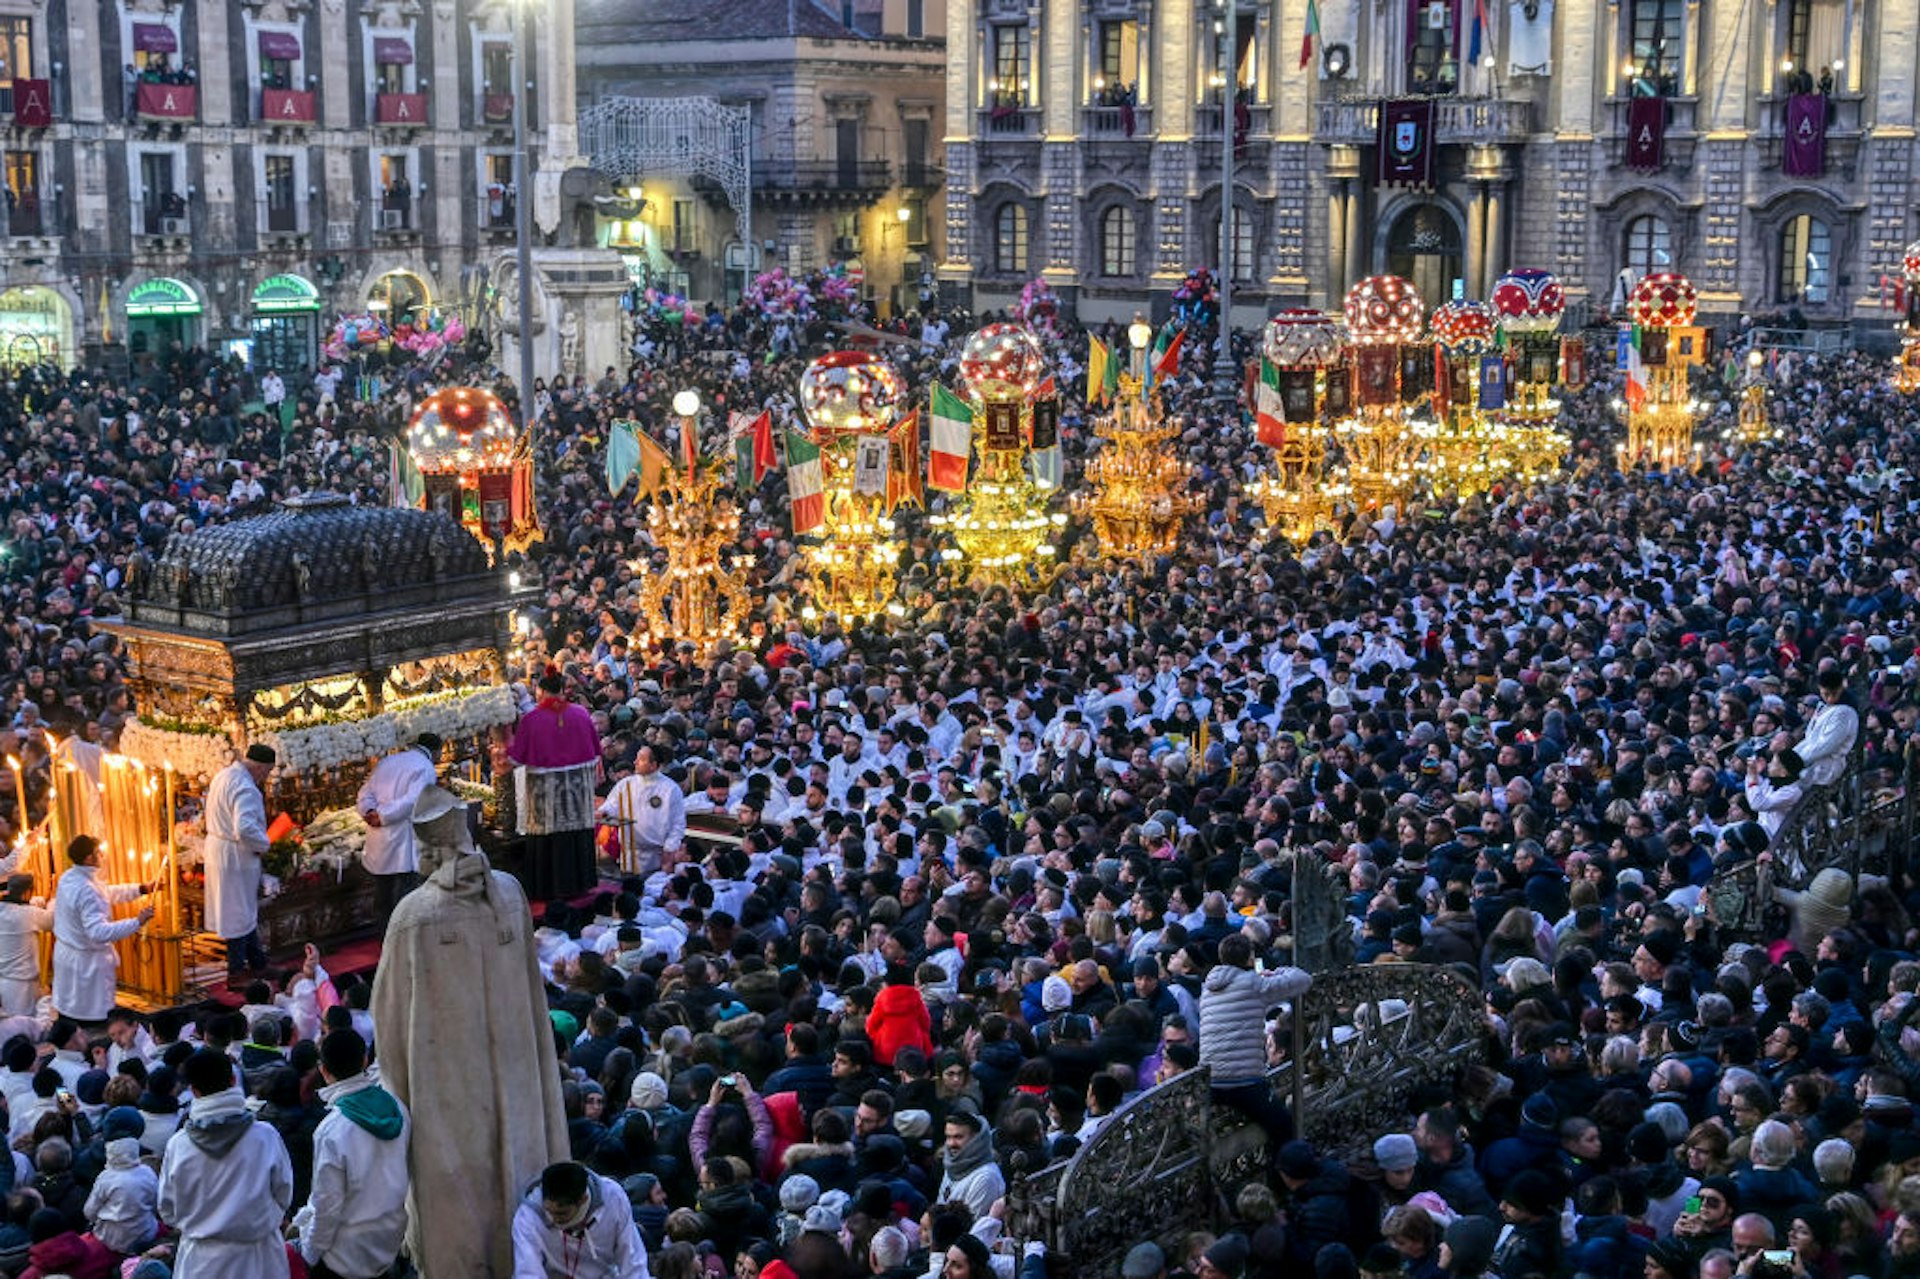 Pilgrims crowd Piazza Duomo in Catania to celebrate the feast of Saint Agatha